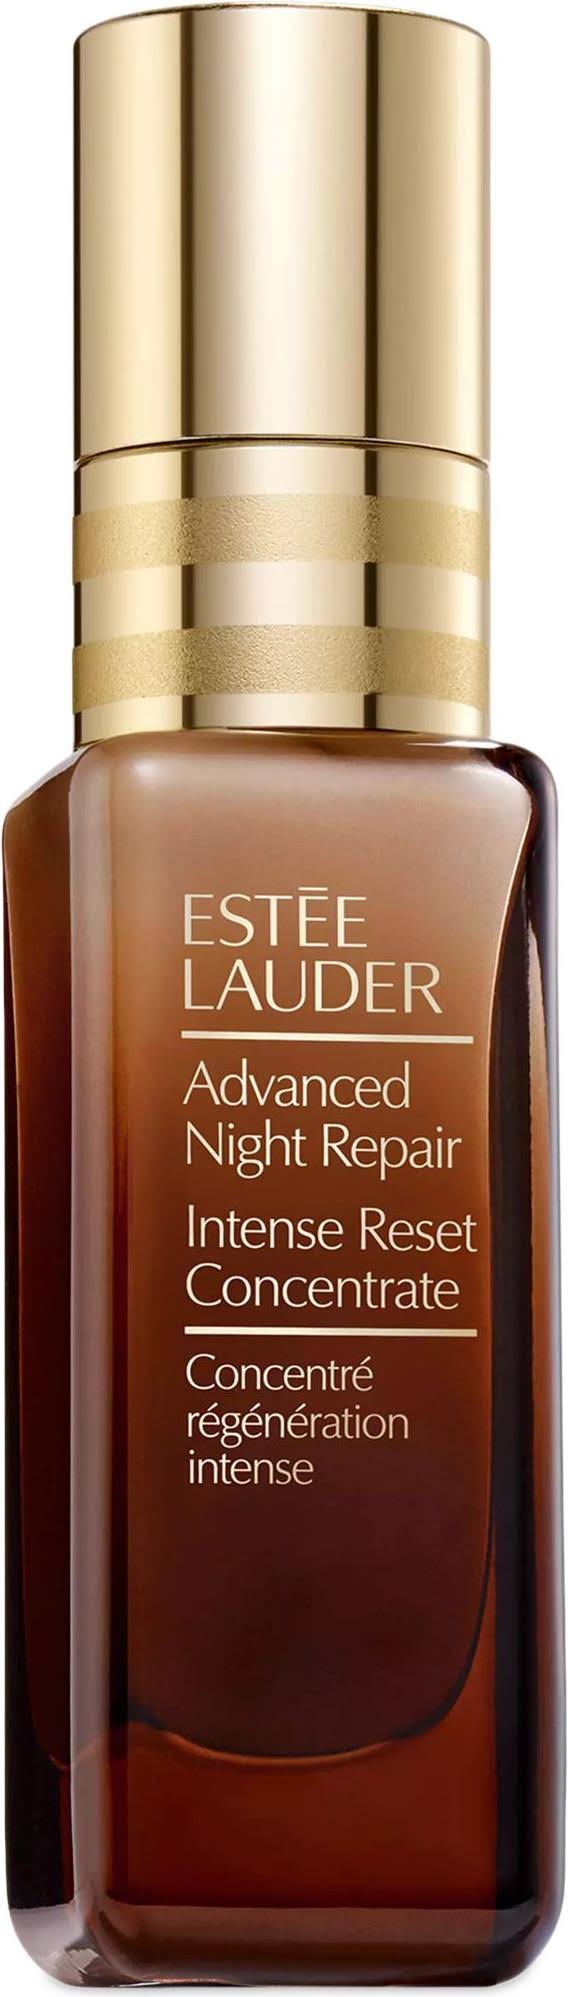 Estee Lauder Advanced Night Repair Face Moisturizer - 0.68oz, Intense Reset Concentrate